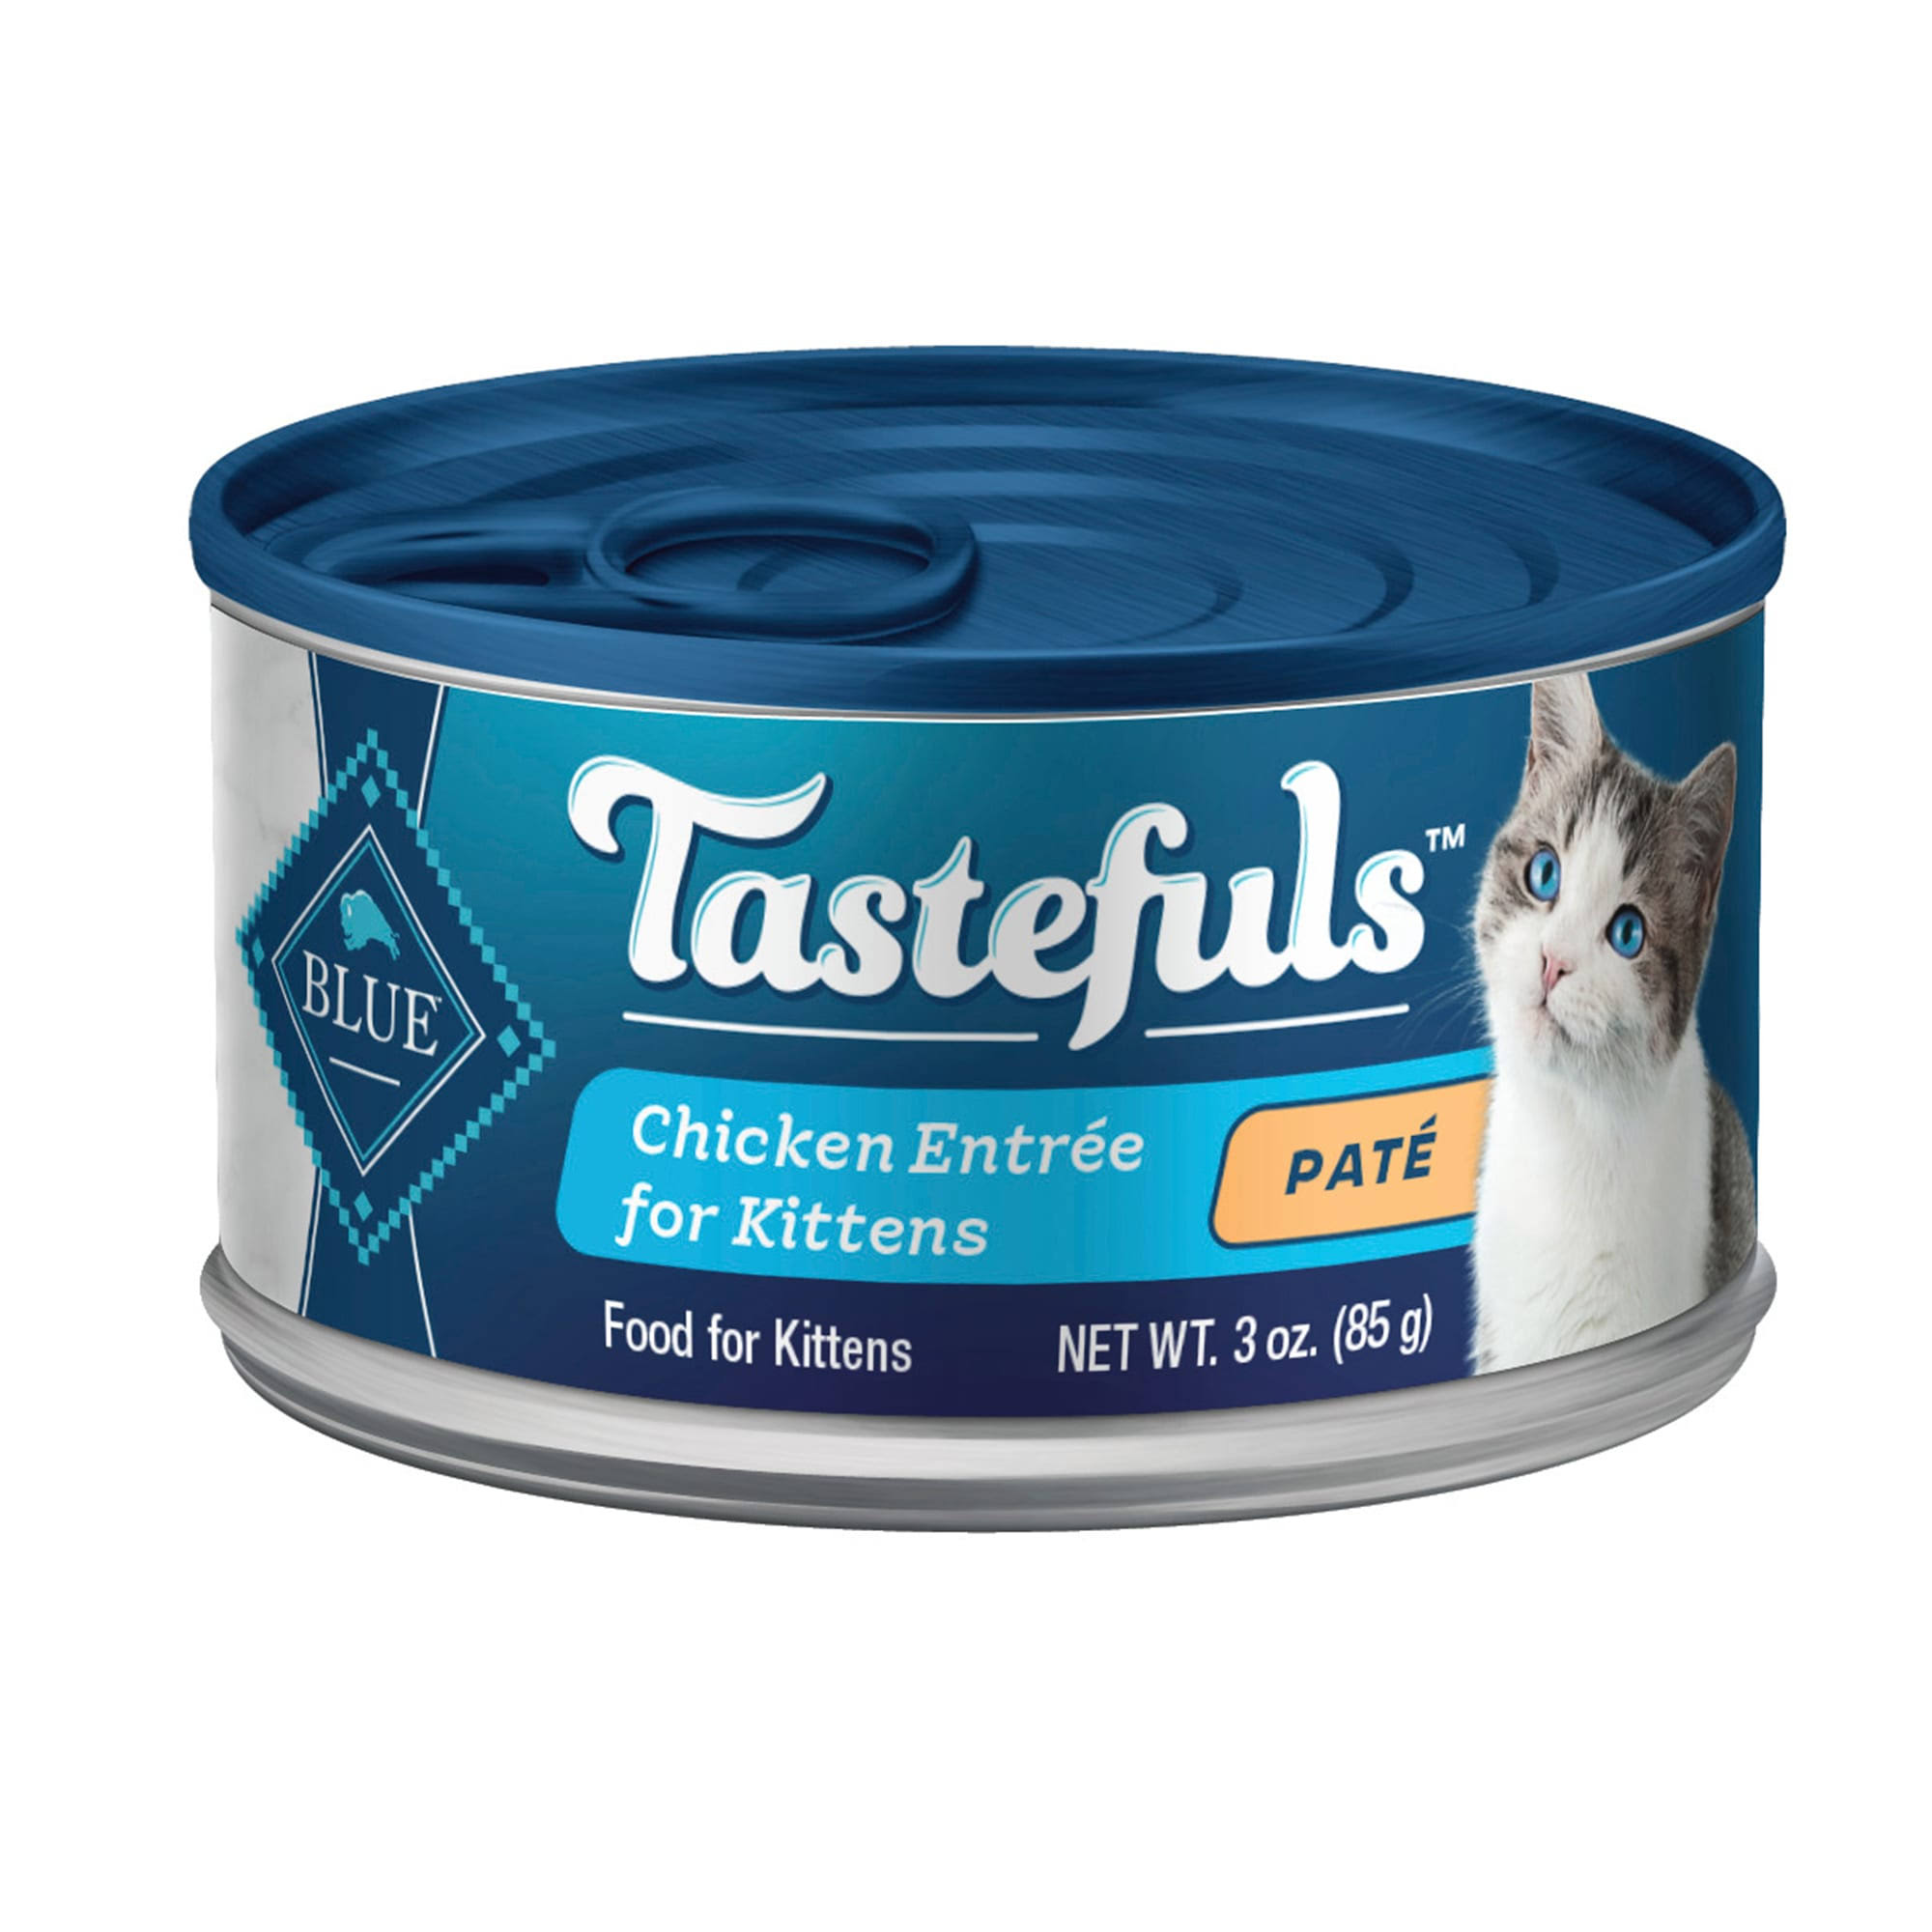 Blue Buffalo Tastefuls Natural Kitten Pate Wet Cat Food, Chicken Entrée 3-oz Cans